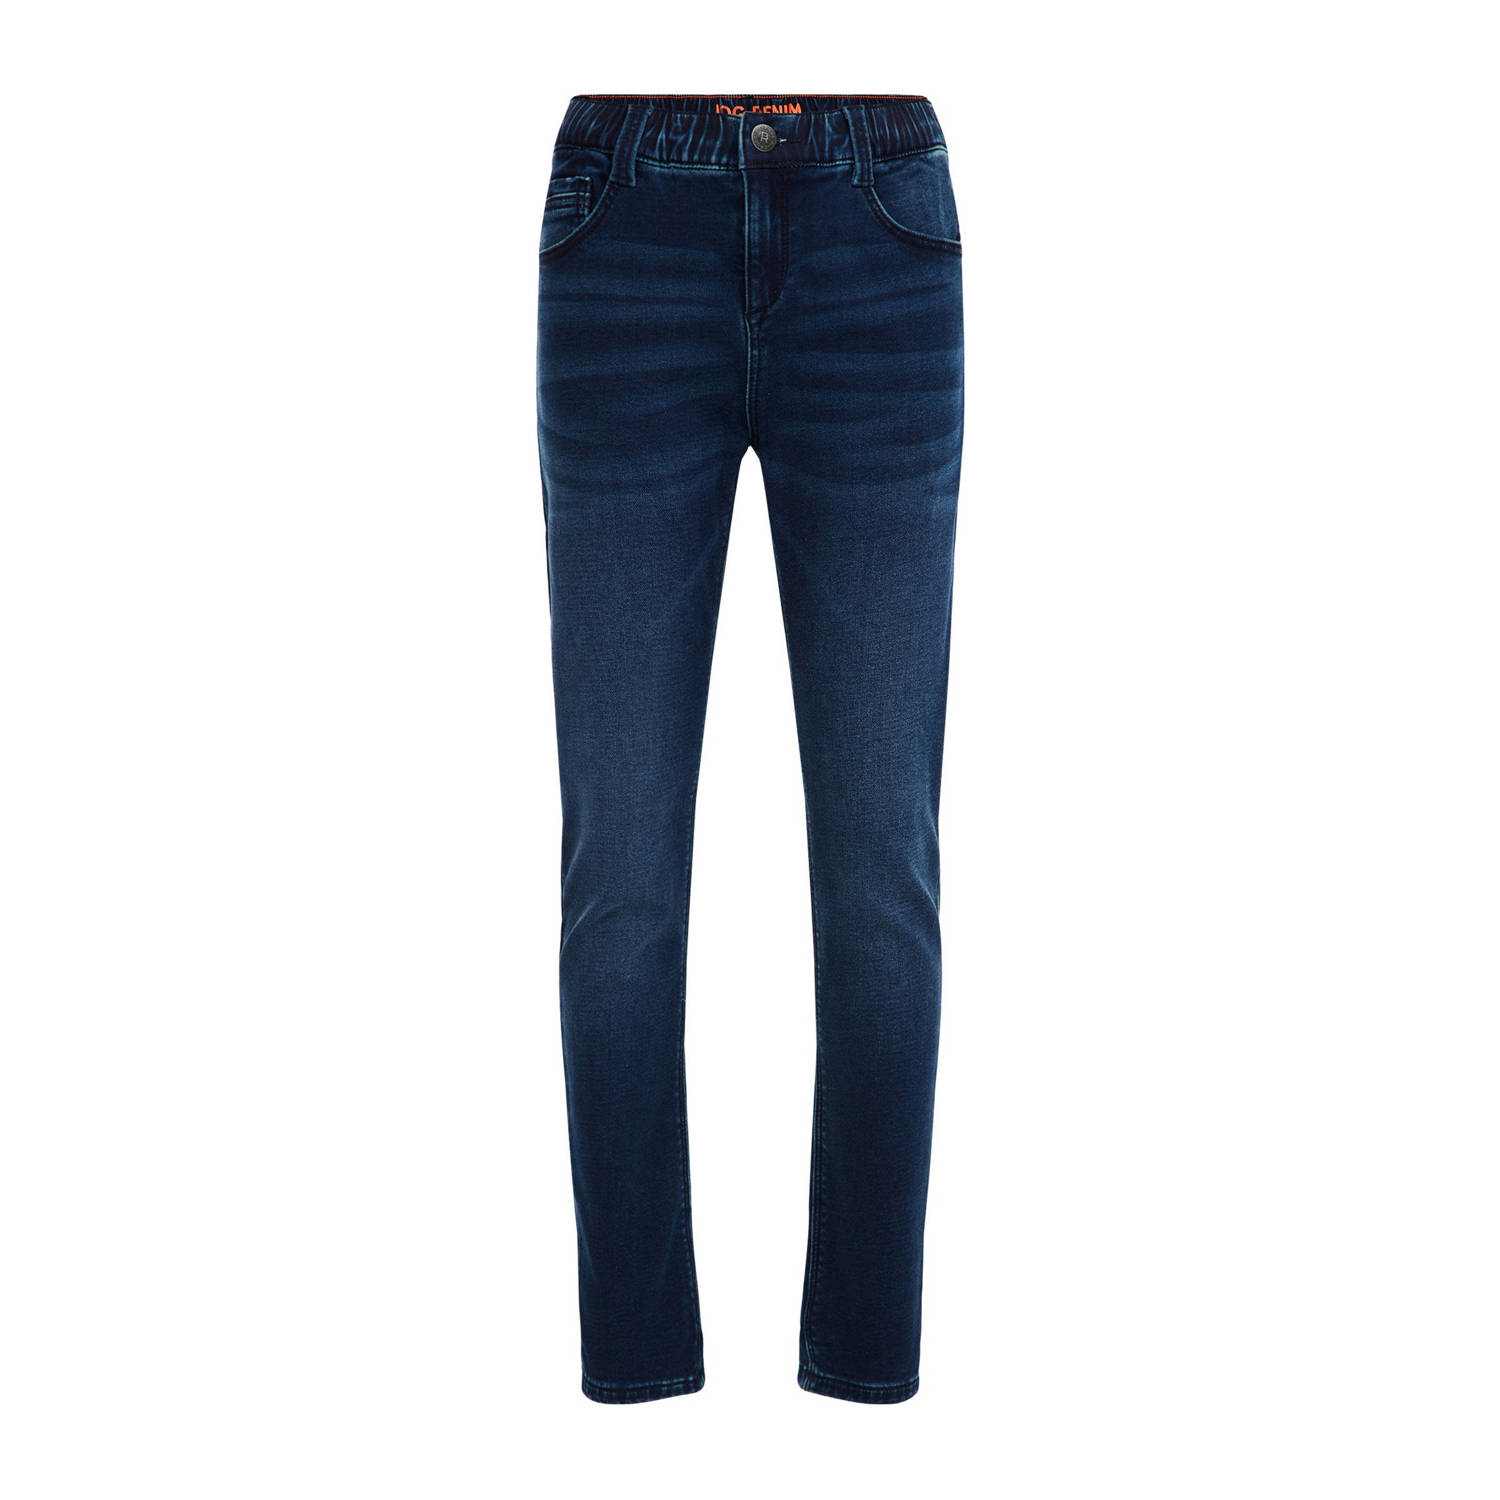 WE Fashion Blue Ridge tapered fit jeans dark used denim